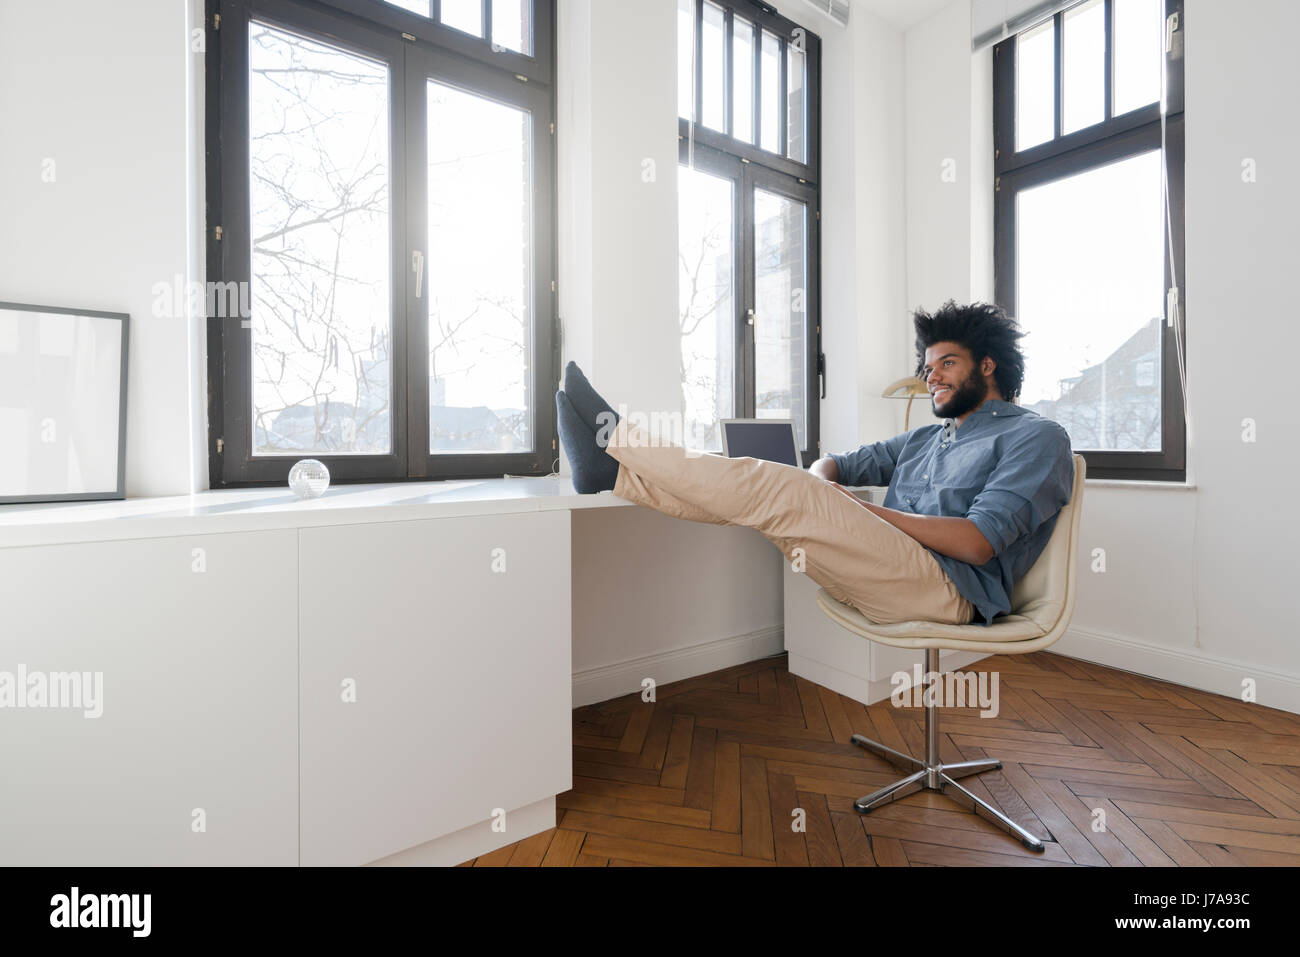 Man sitting in minimalist empty room on chair Stock Photo